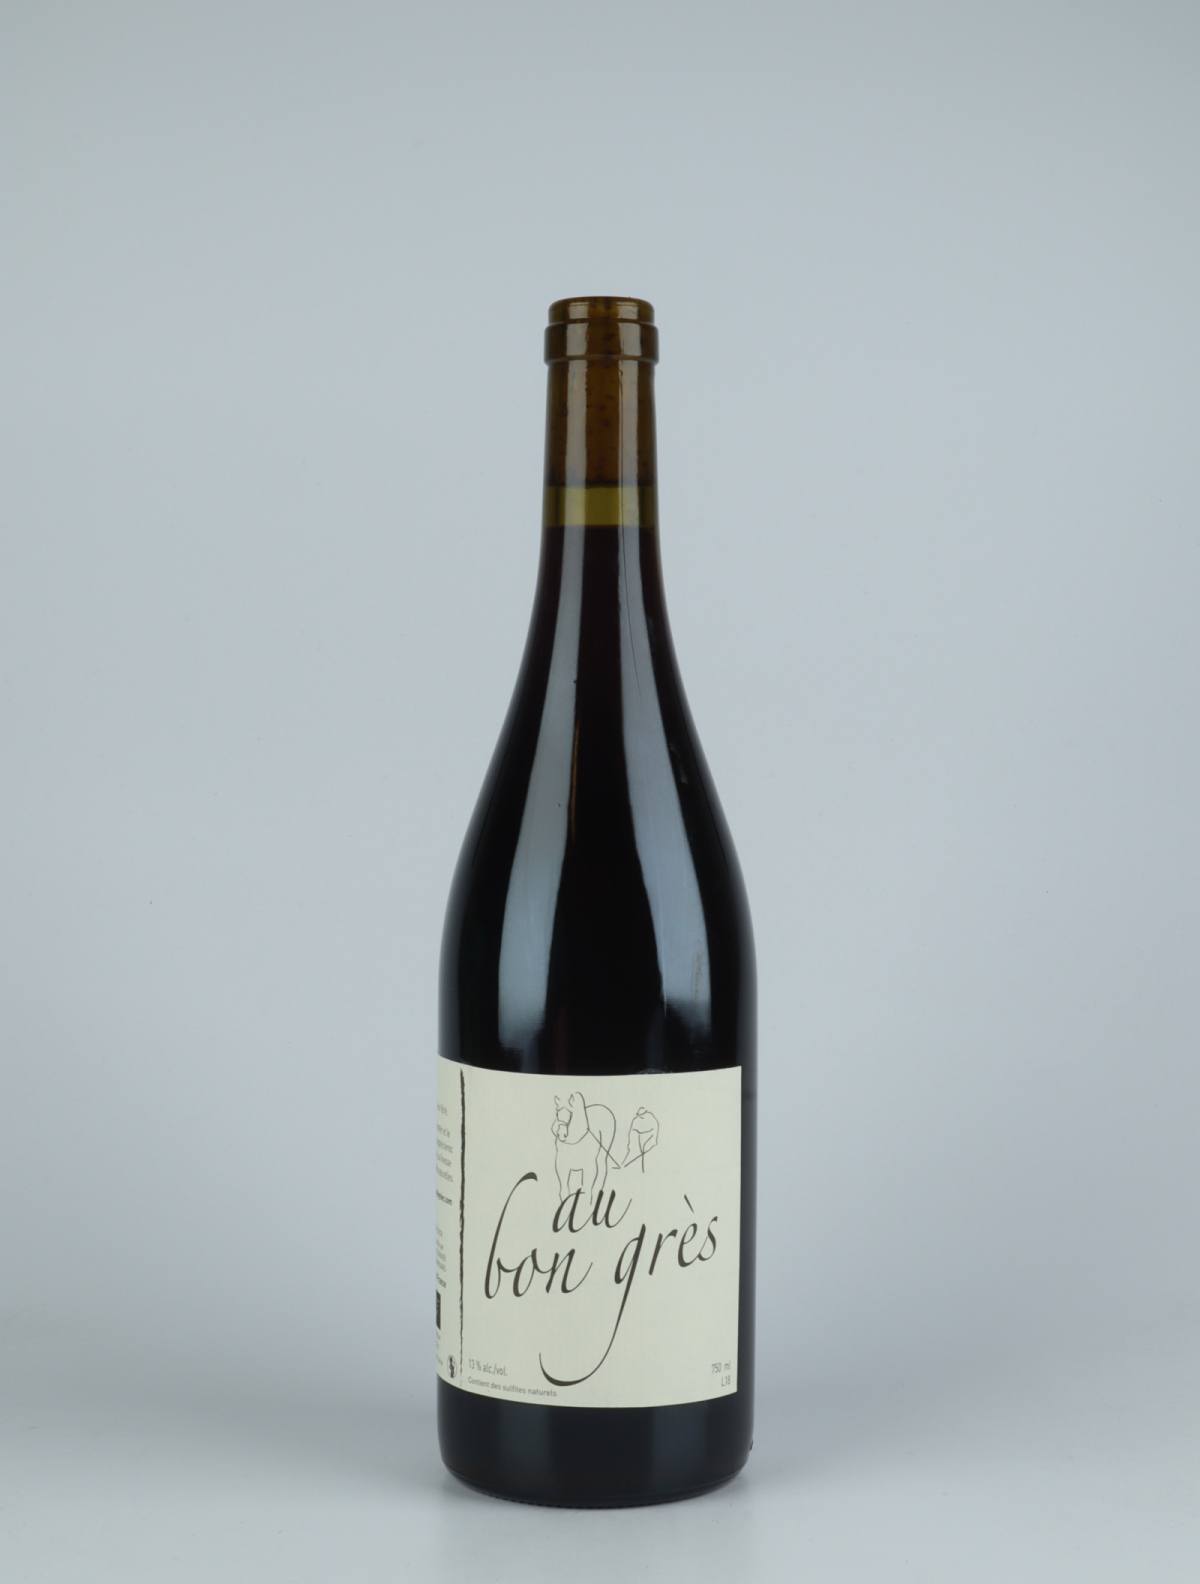 En flaske 2018 Au Bon Grès Rødvin fra Michel Guignier, Beaujolais i Frankrig